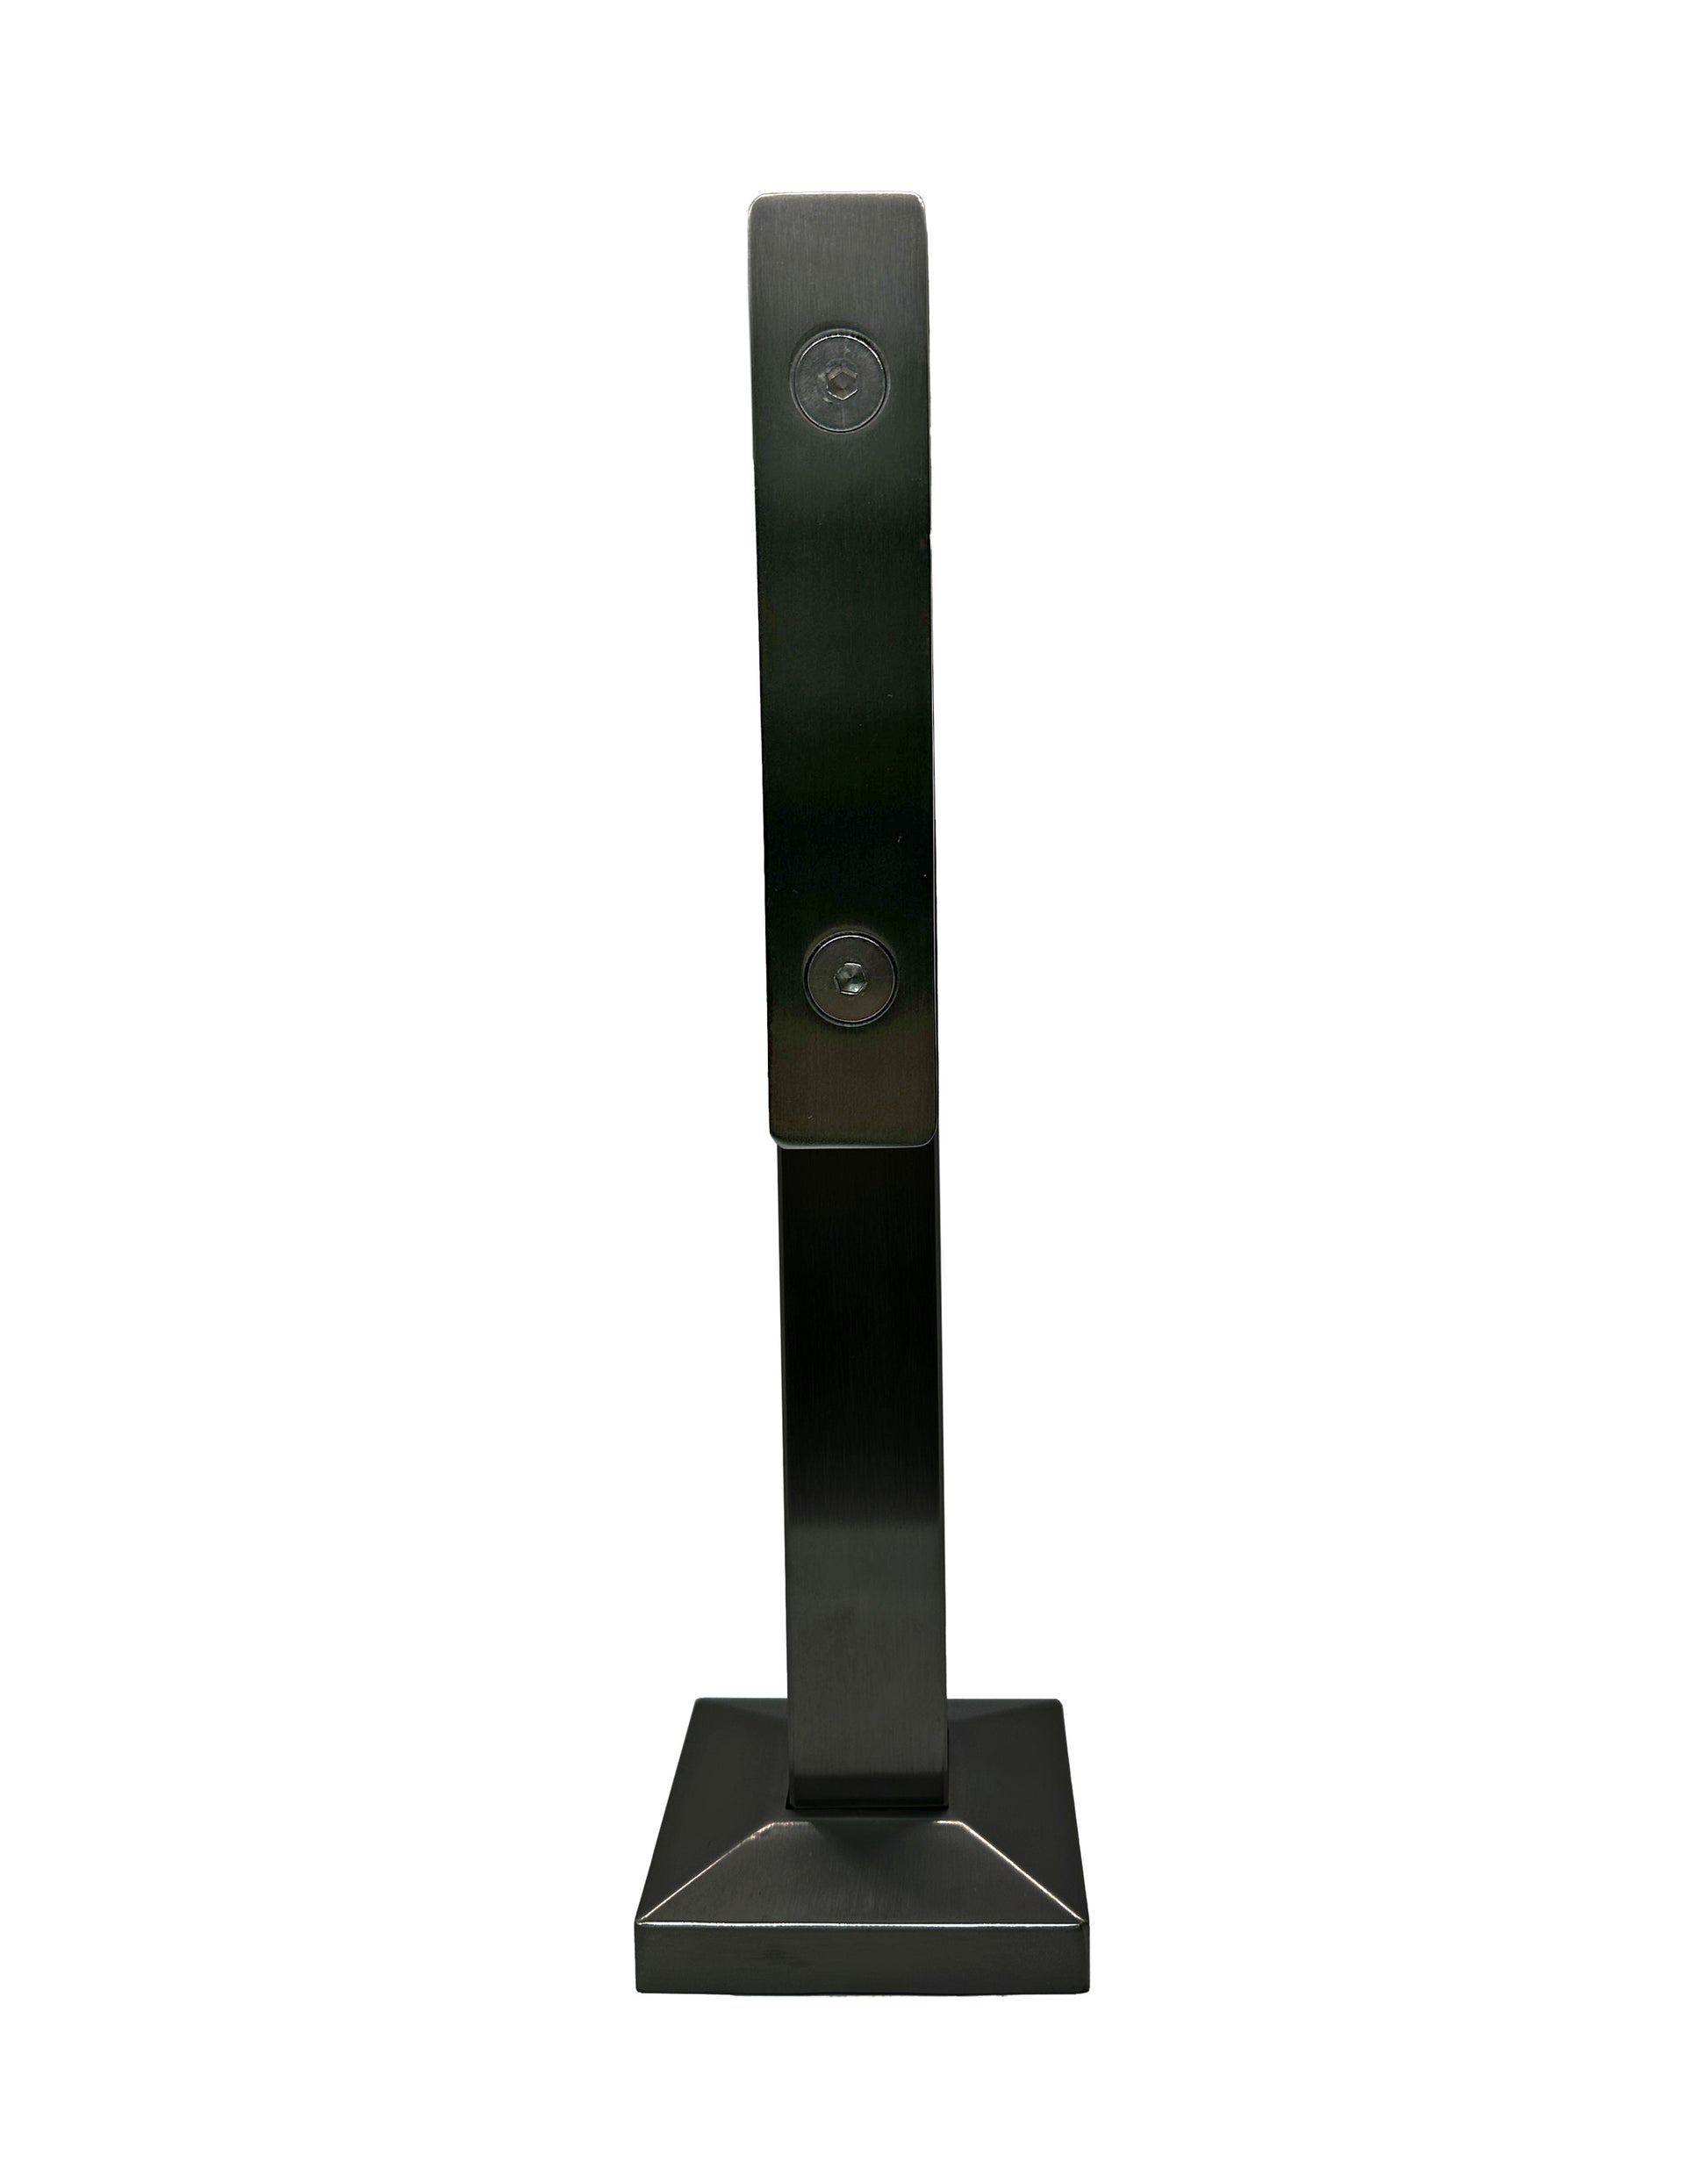 Black Matte Stainless Steel Glass Talon 15" Post Spigot Balustrade for Stairs Incline Glass Railing  (G1120-BLK) - SHEMONICO